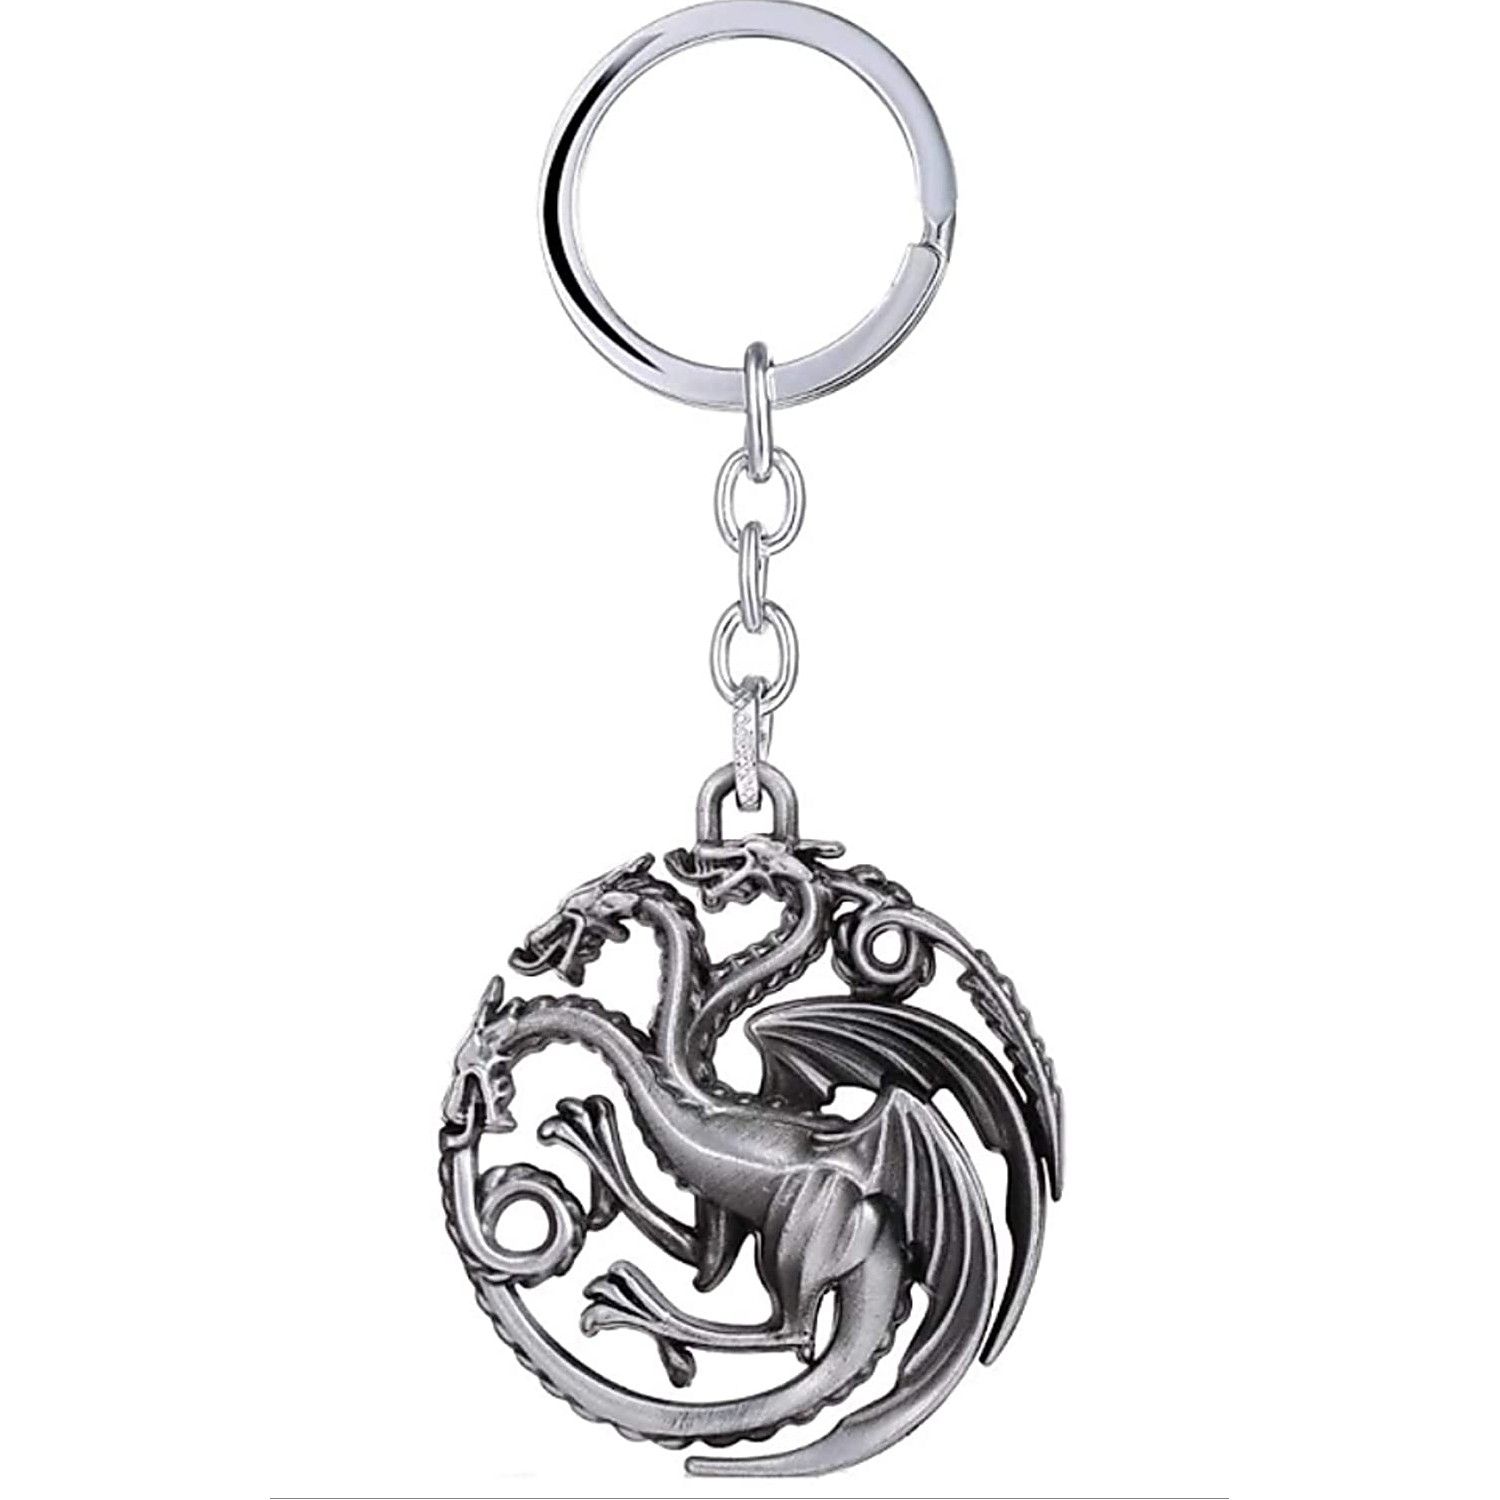 Smallall Game Of Thrones Targaryen 3 Headed Dragon Keychain